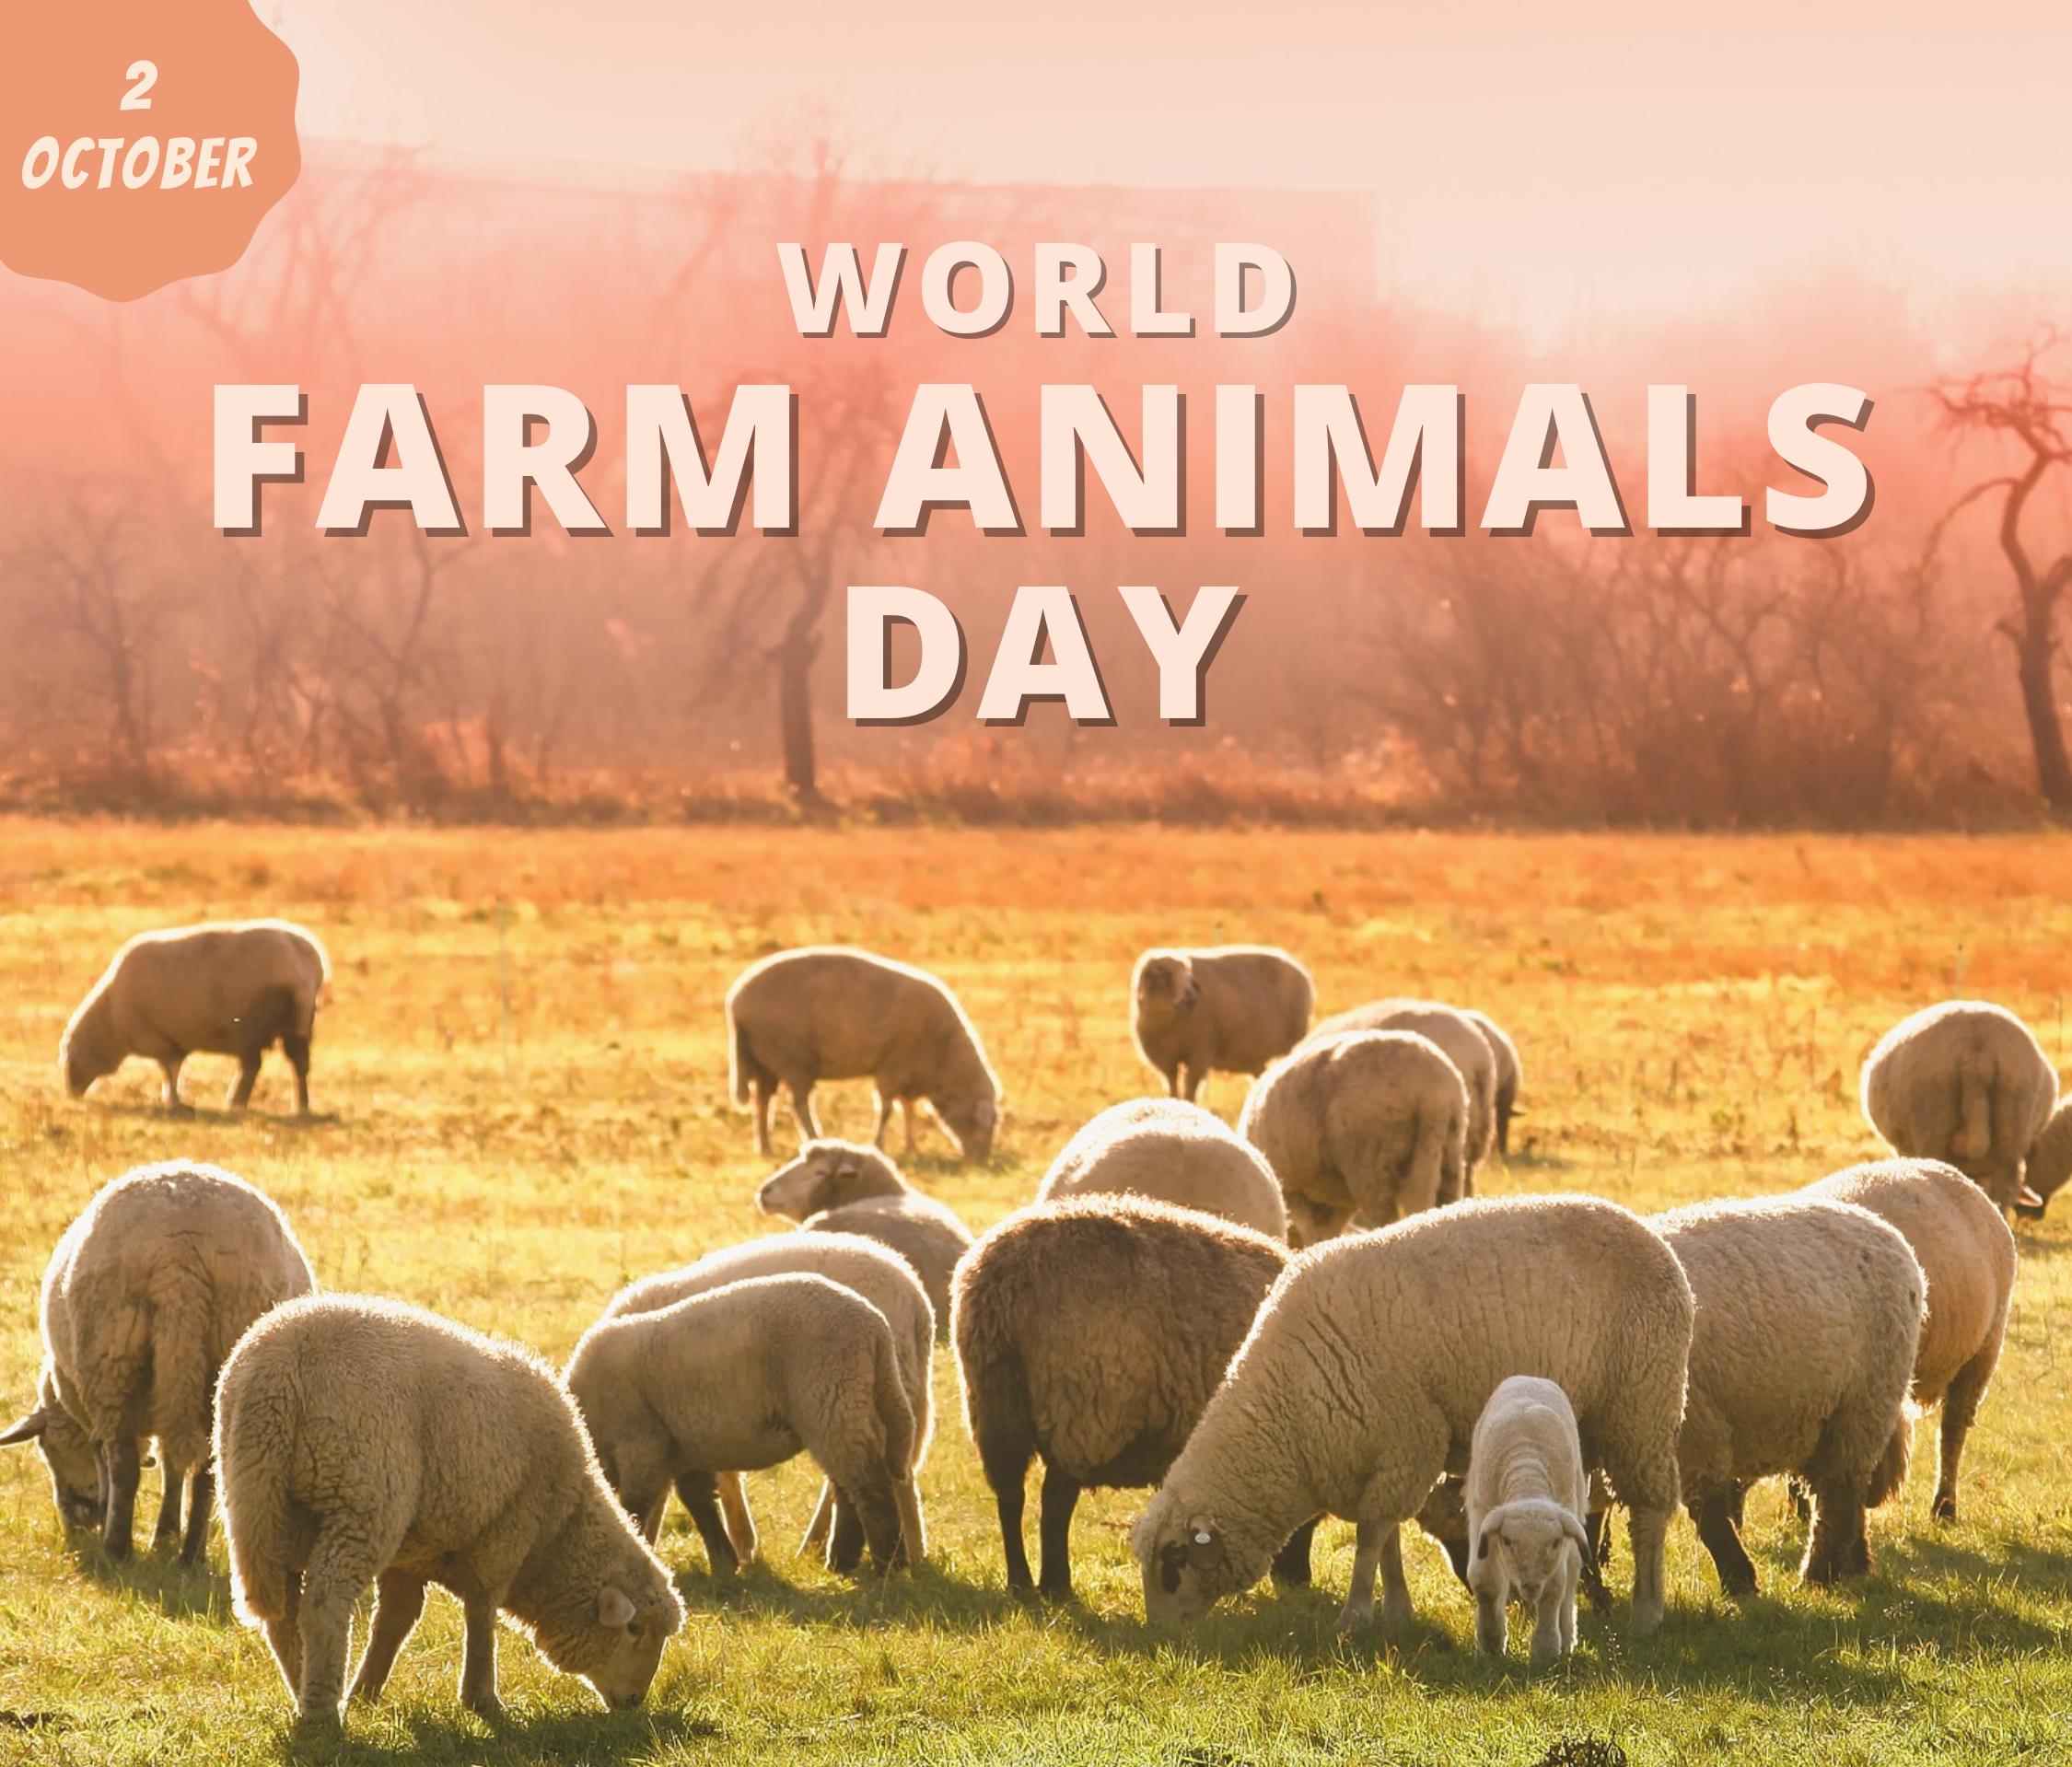 Farm Animals Day